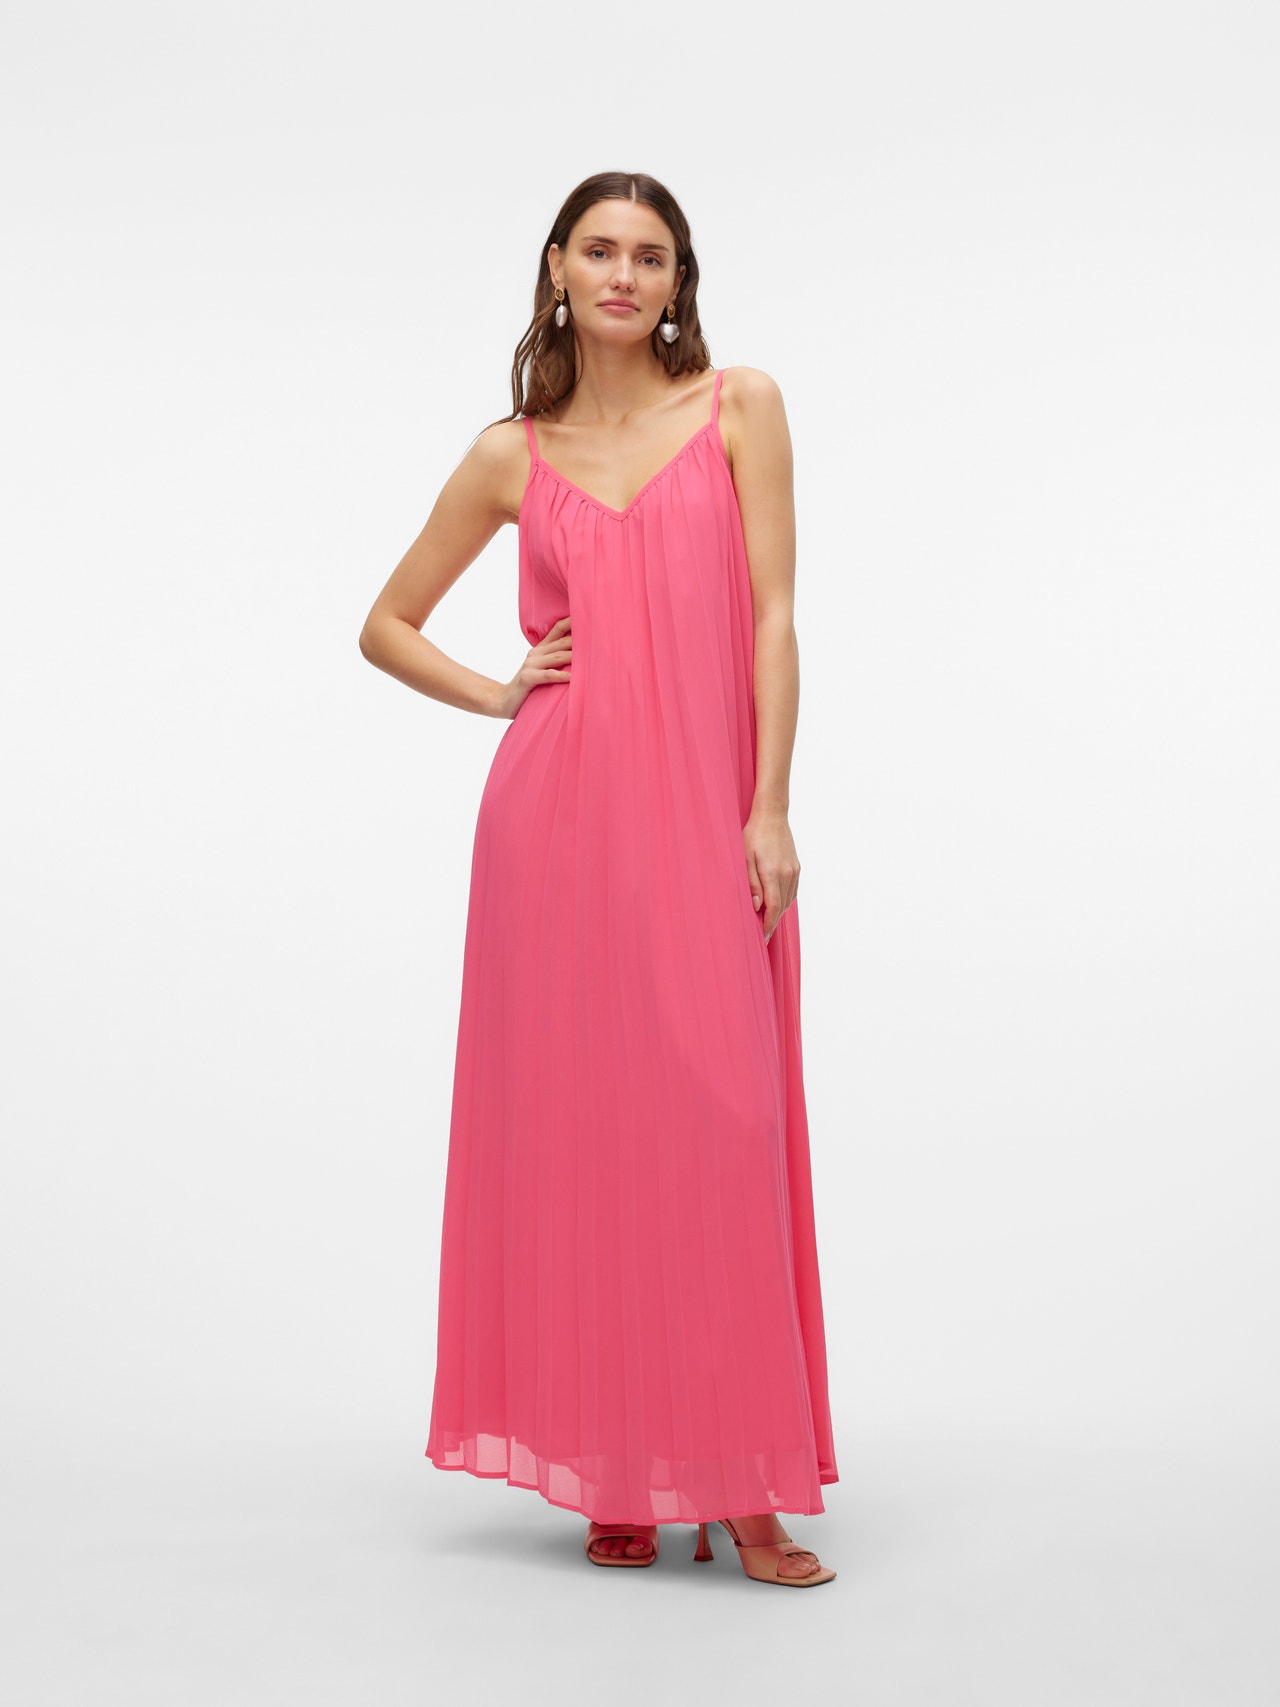 Vero Moda VMBITTEN Long dress -Fandango Pink - 10322238